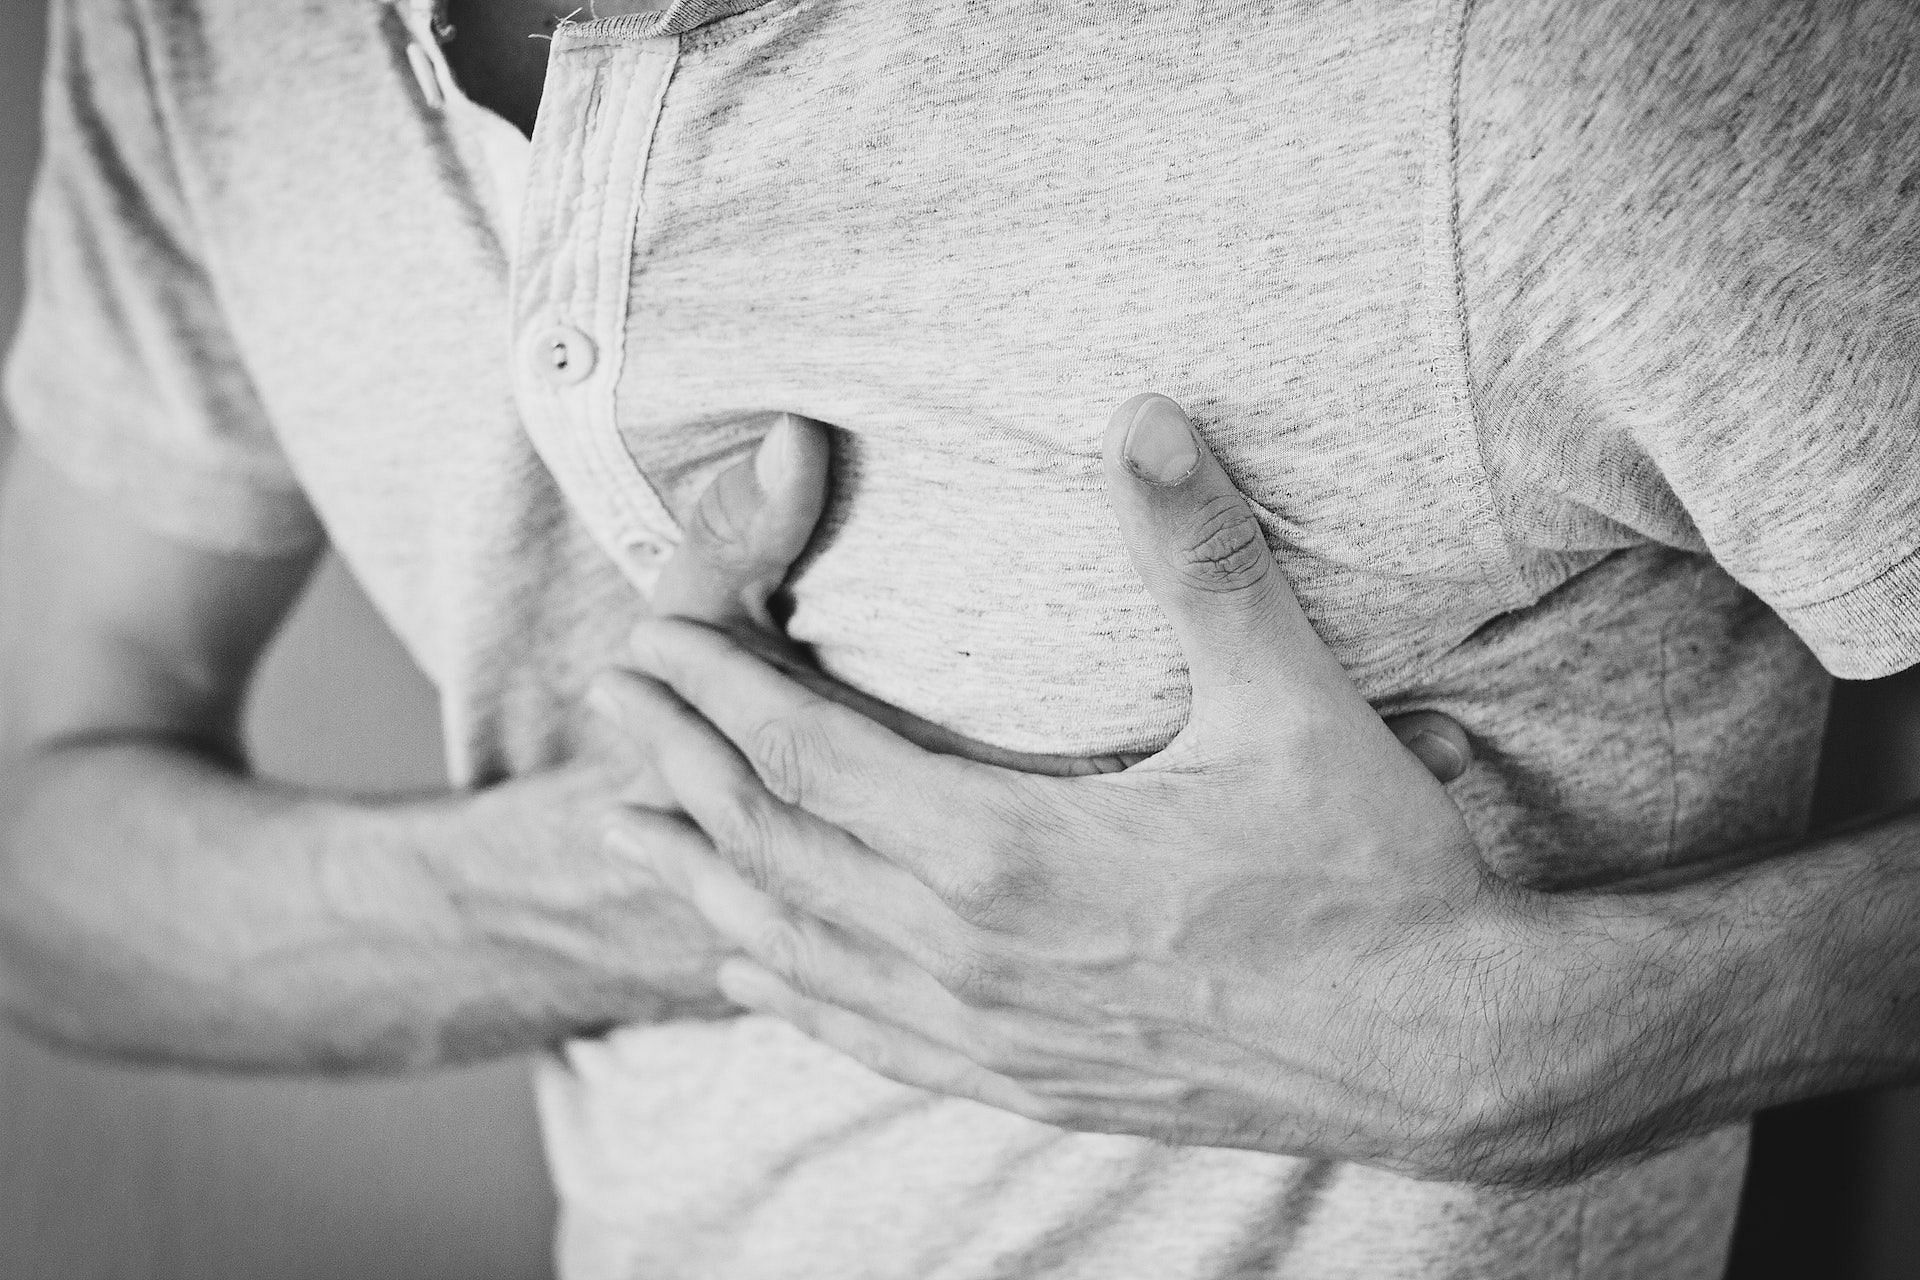 Symptoms of pancreatitis include fast heartbeat. (Photo via Pexels/freestocks.org)